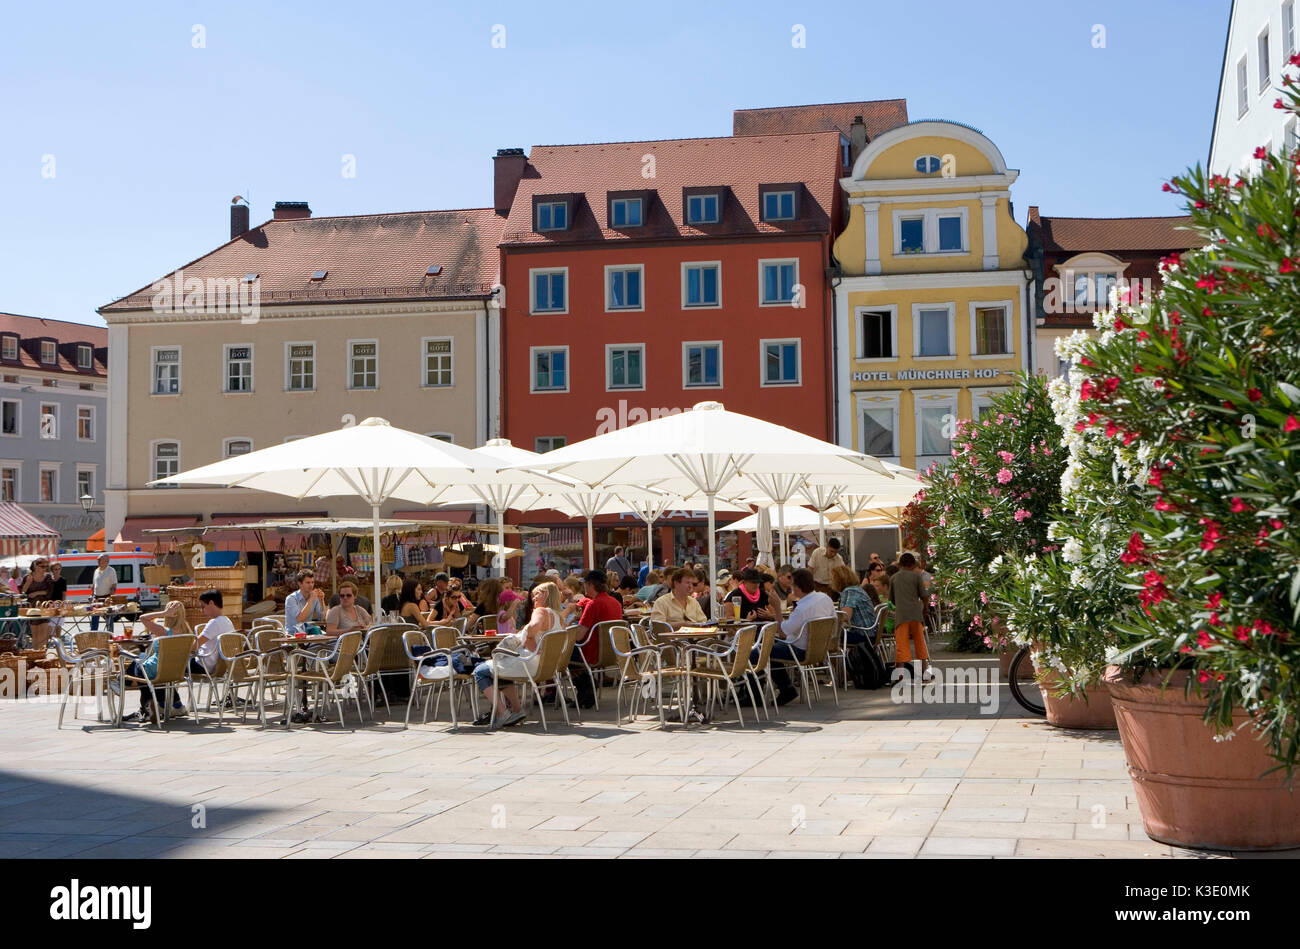 Ratisbona, Neupfarrplatz (quadrato), street café, turistico, Foto Stock